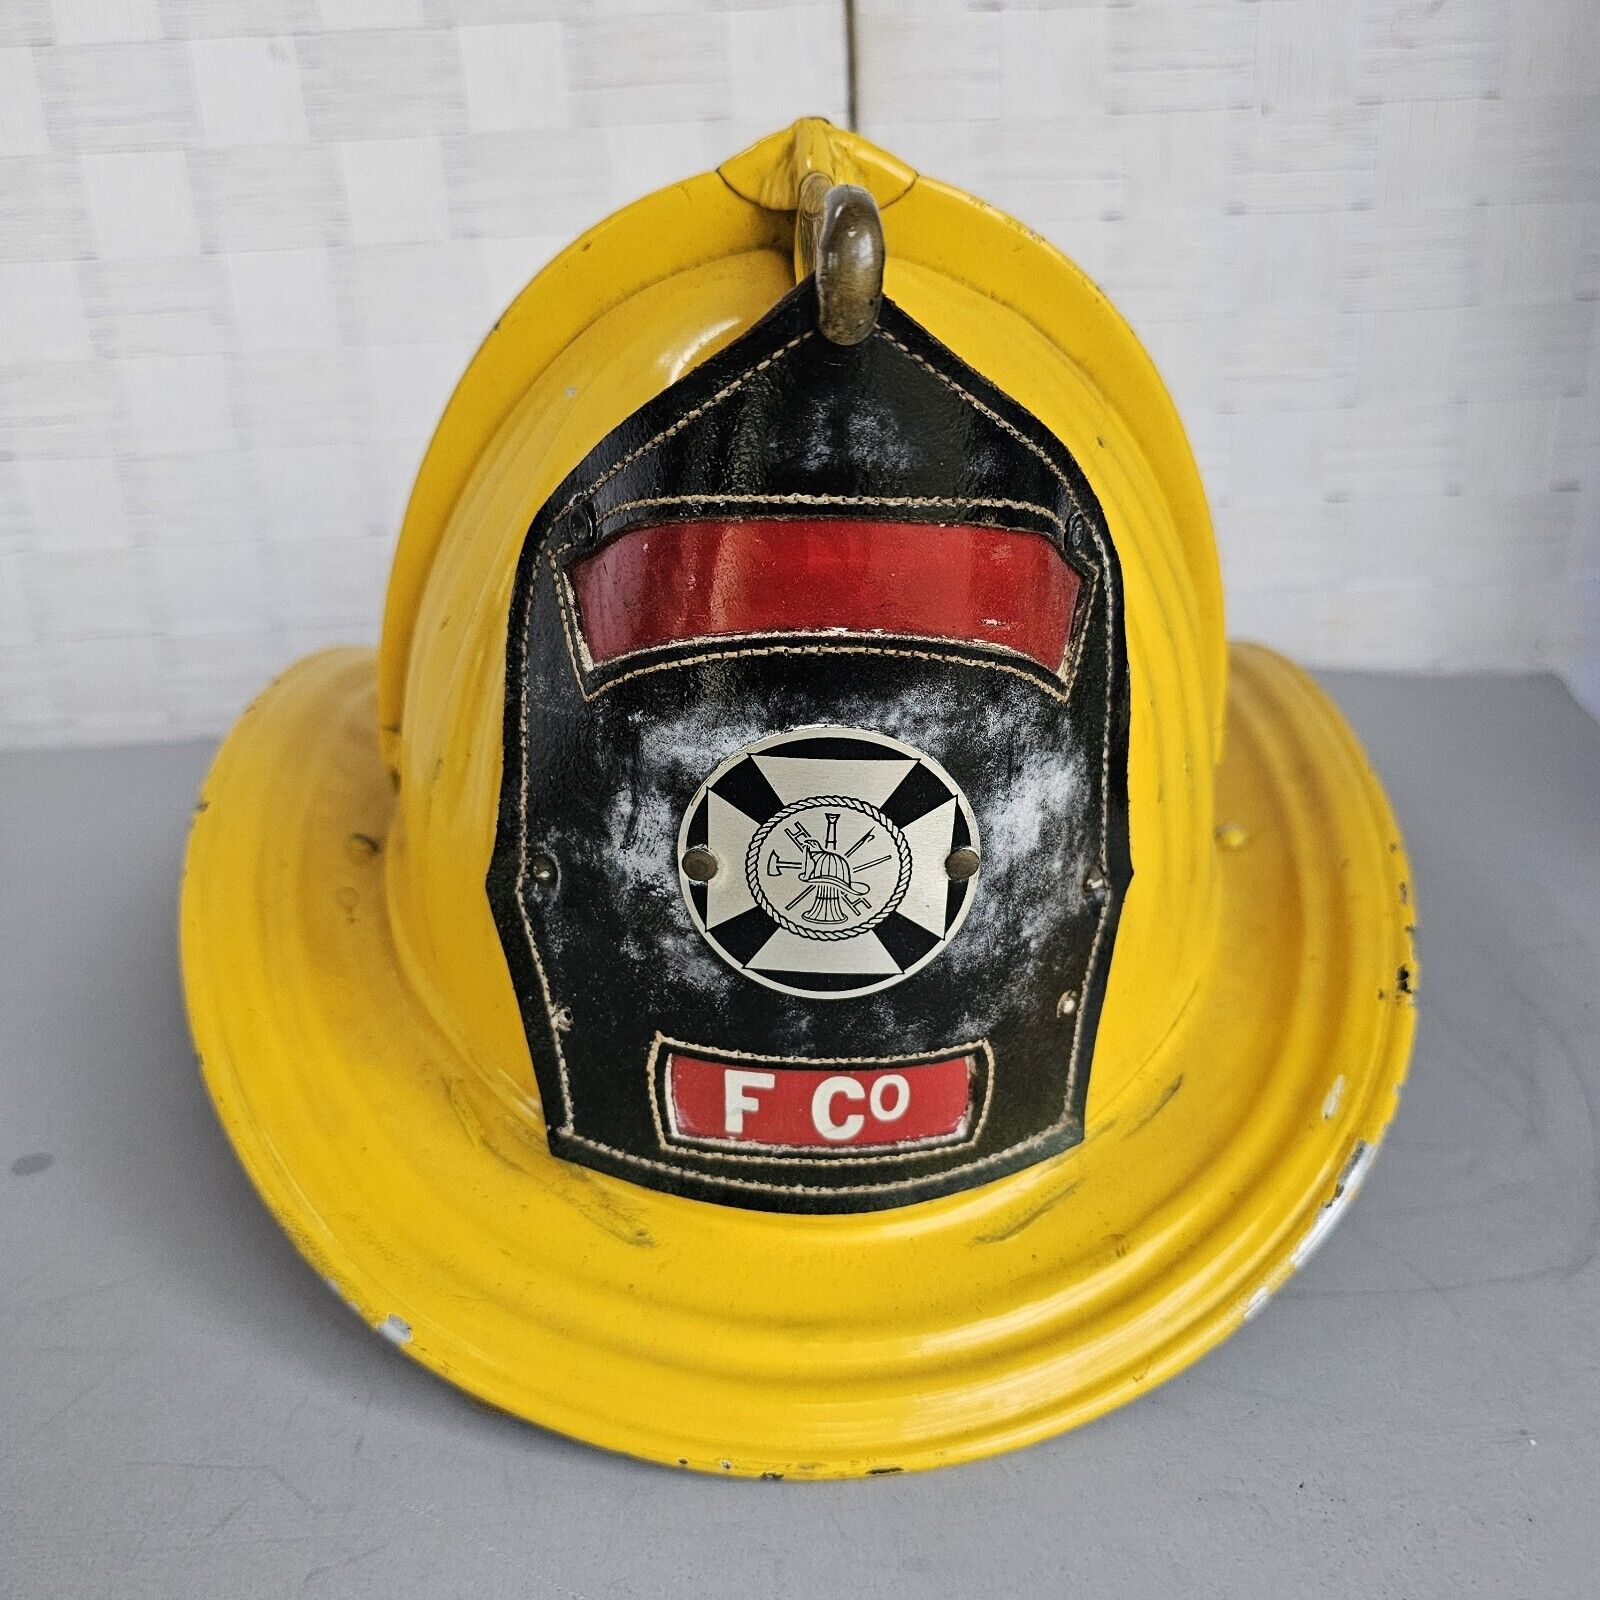 Vintage Cairns Metal Fire Helmet 